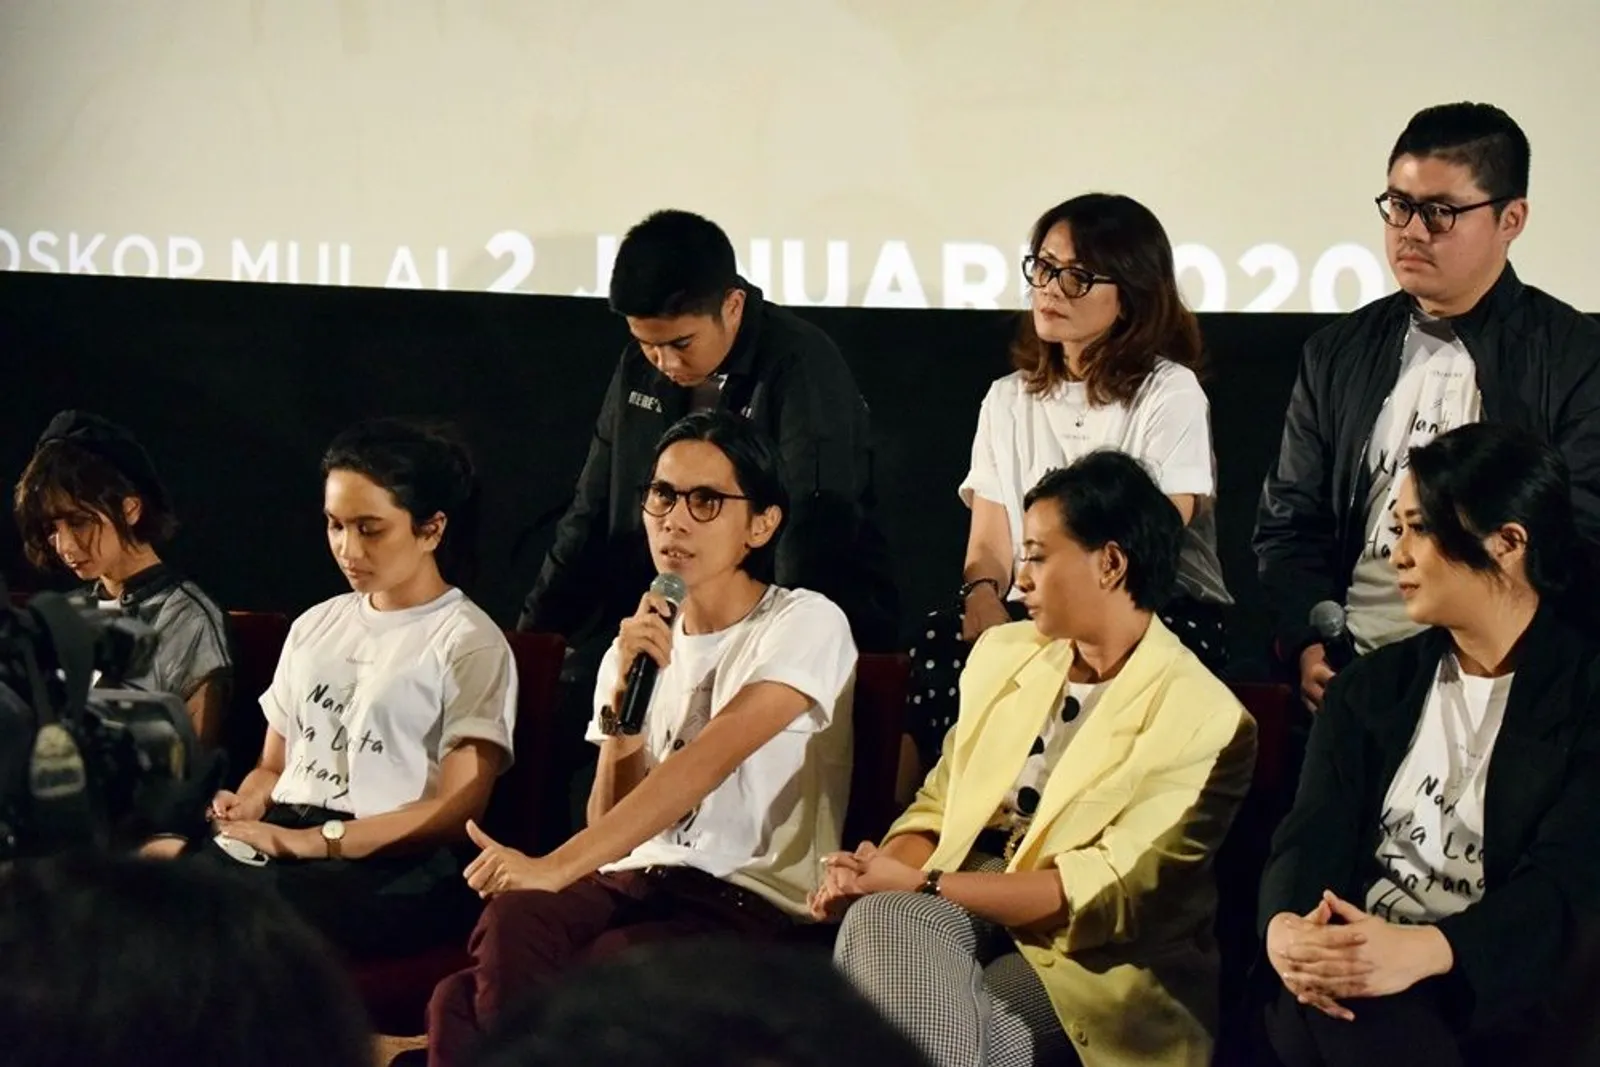 Penuh Rasa, Film NKCTHI Wajib Ditonton oleh Para Keluarga di Indonesia